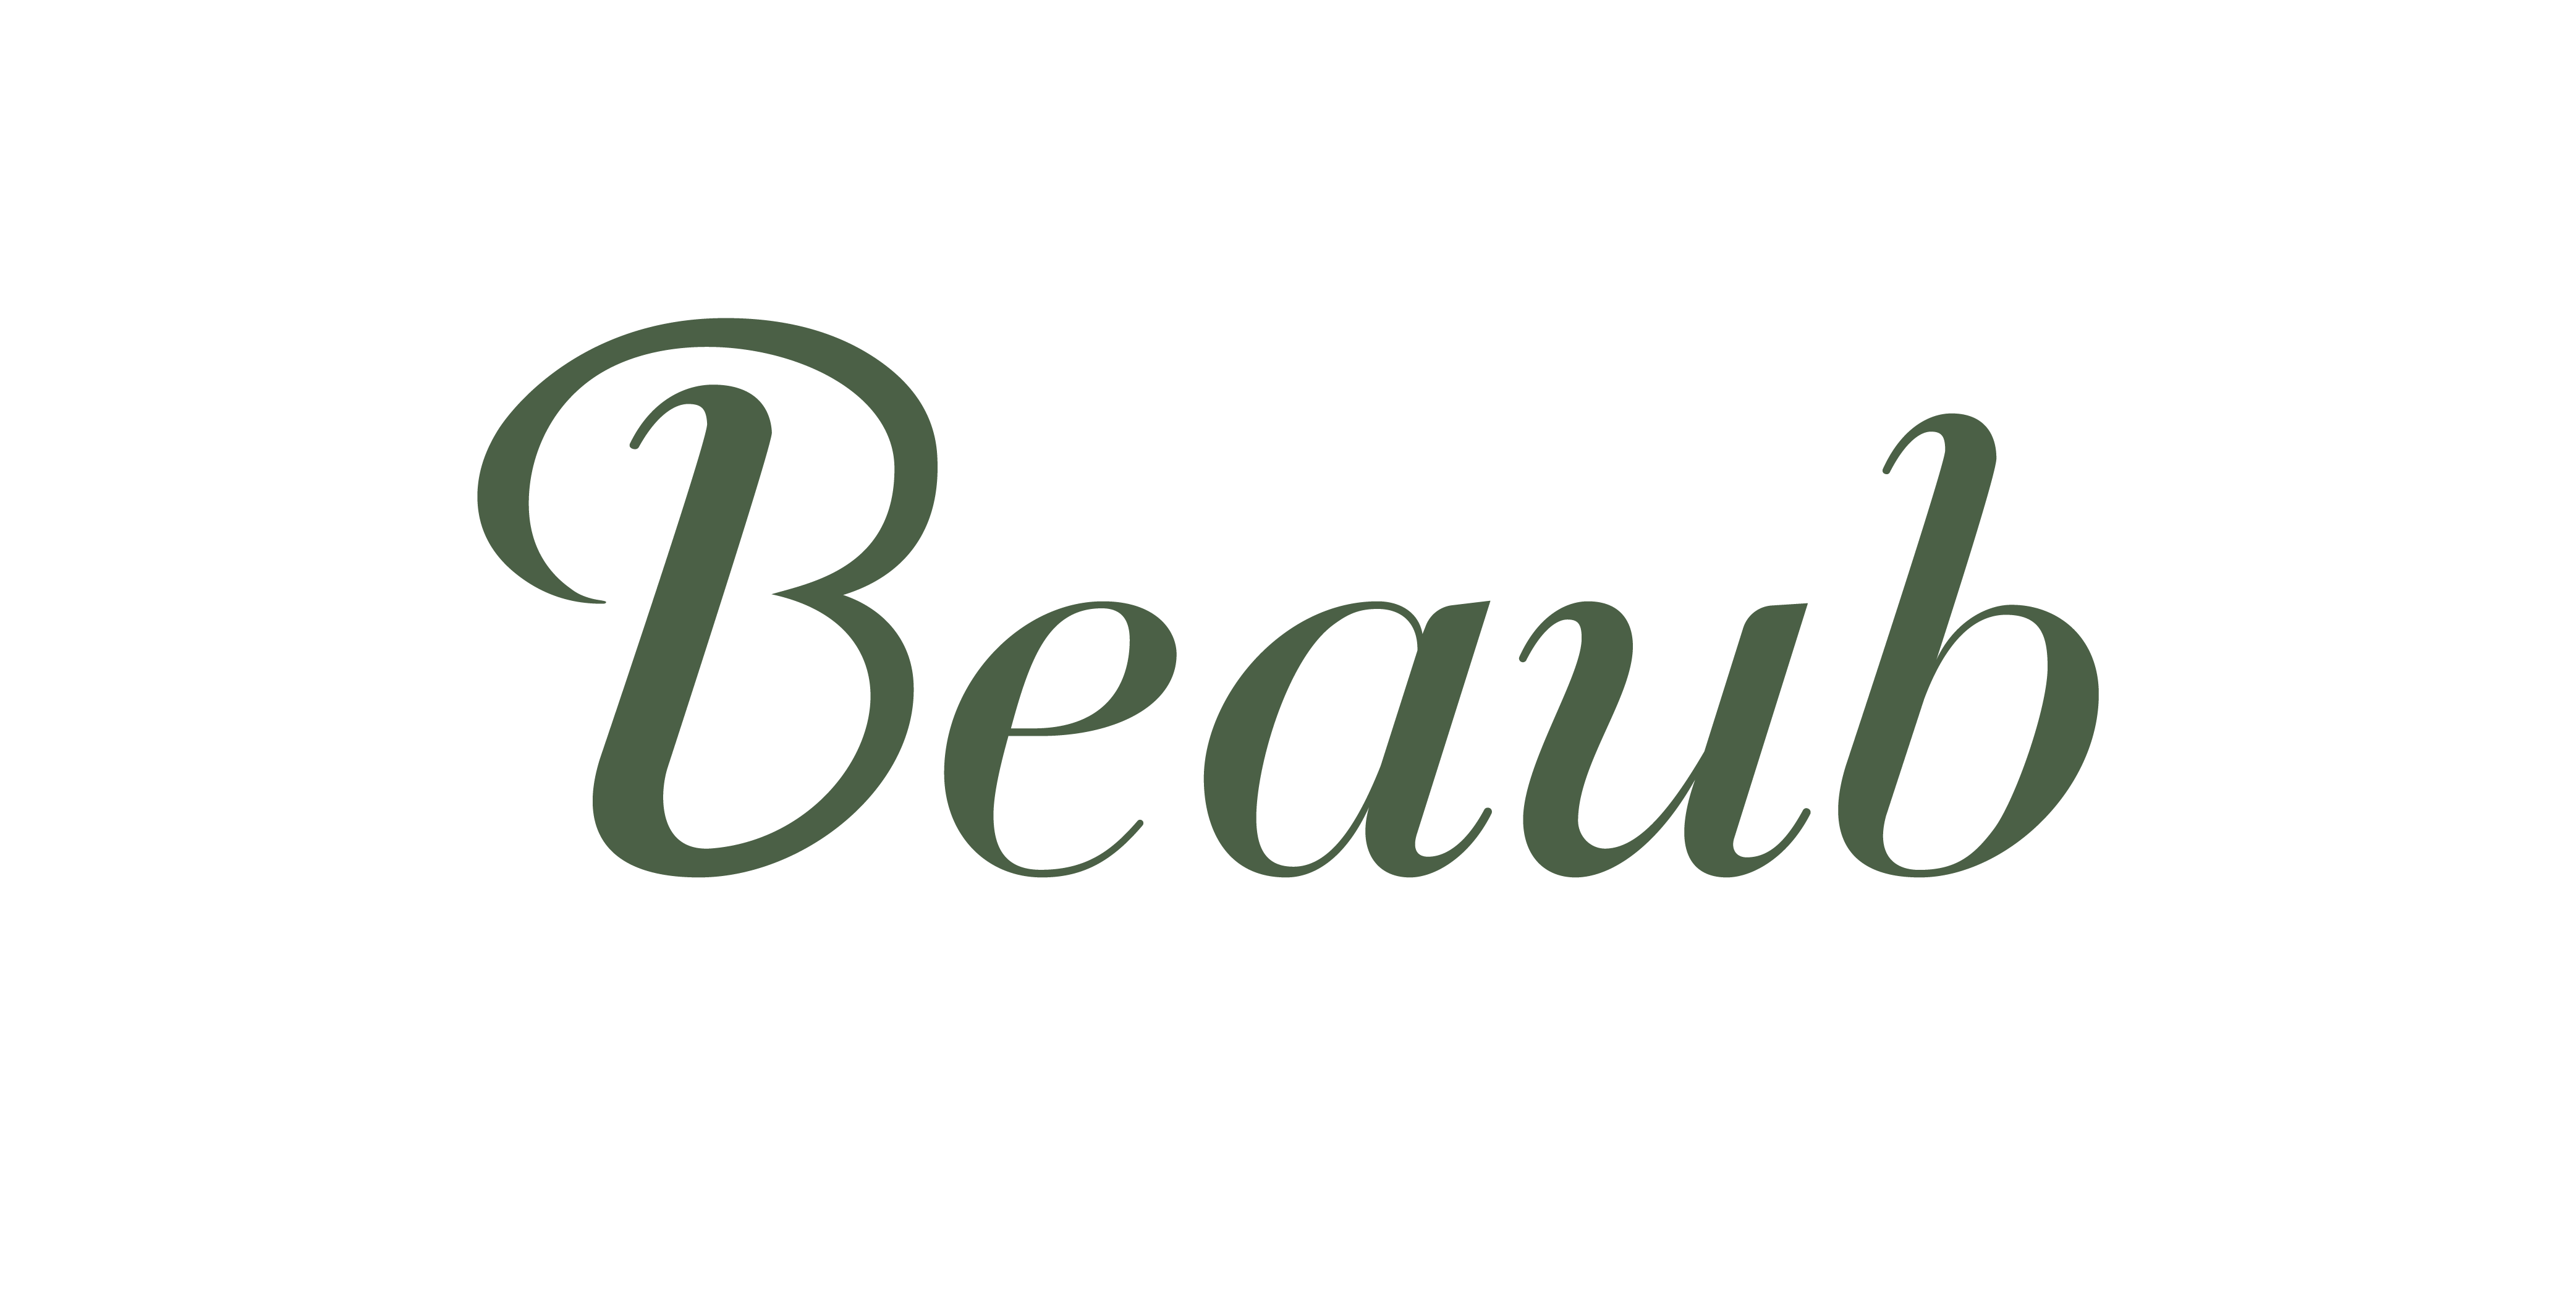 Beaub